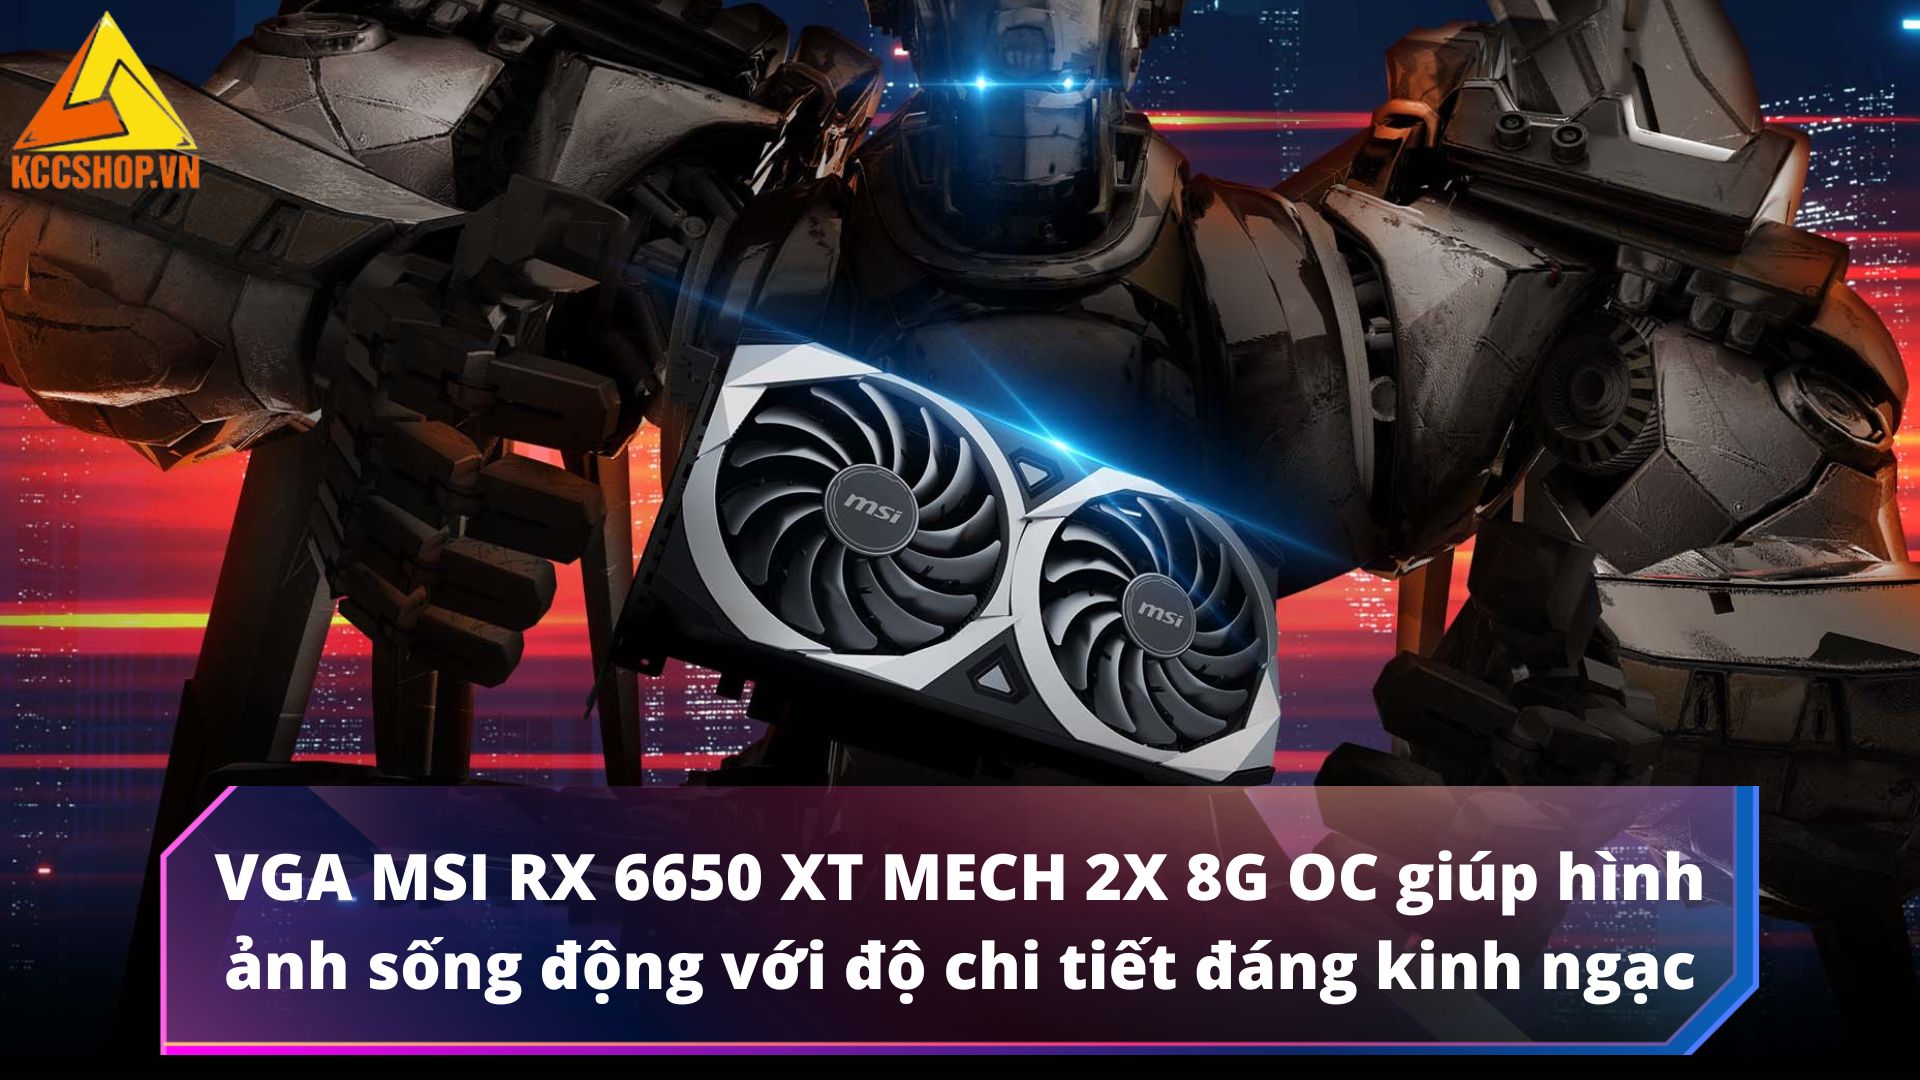 VGA MSI RX 6650 XT MECH 2X 8G OC